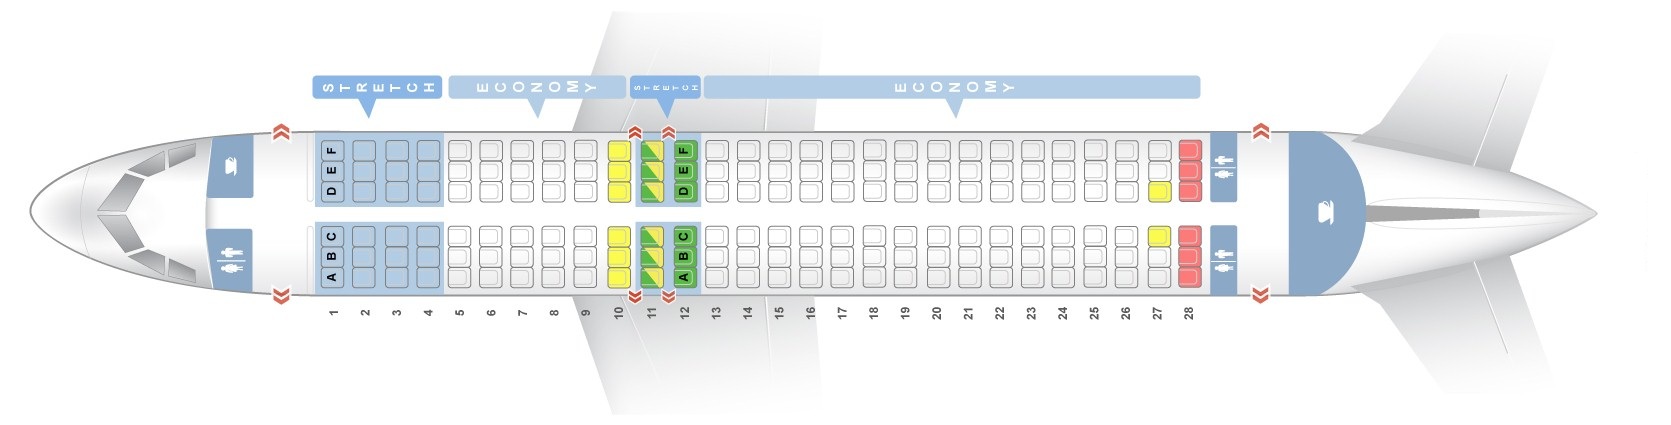 Frontier Flight Seating Chart